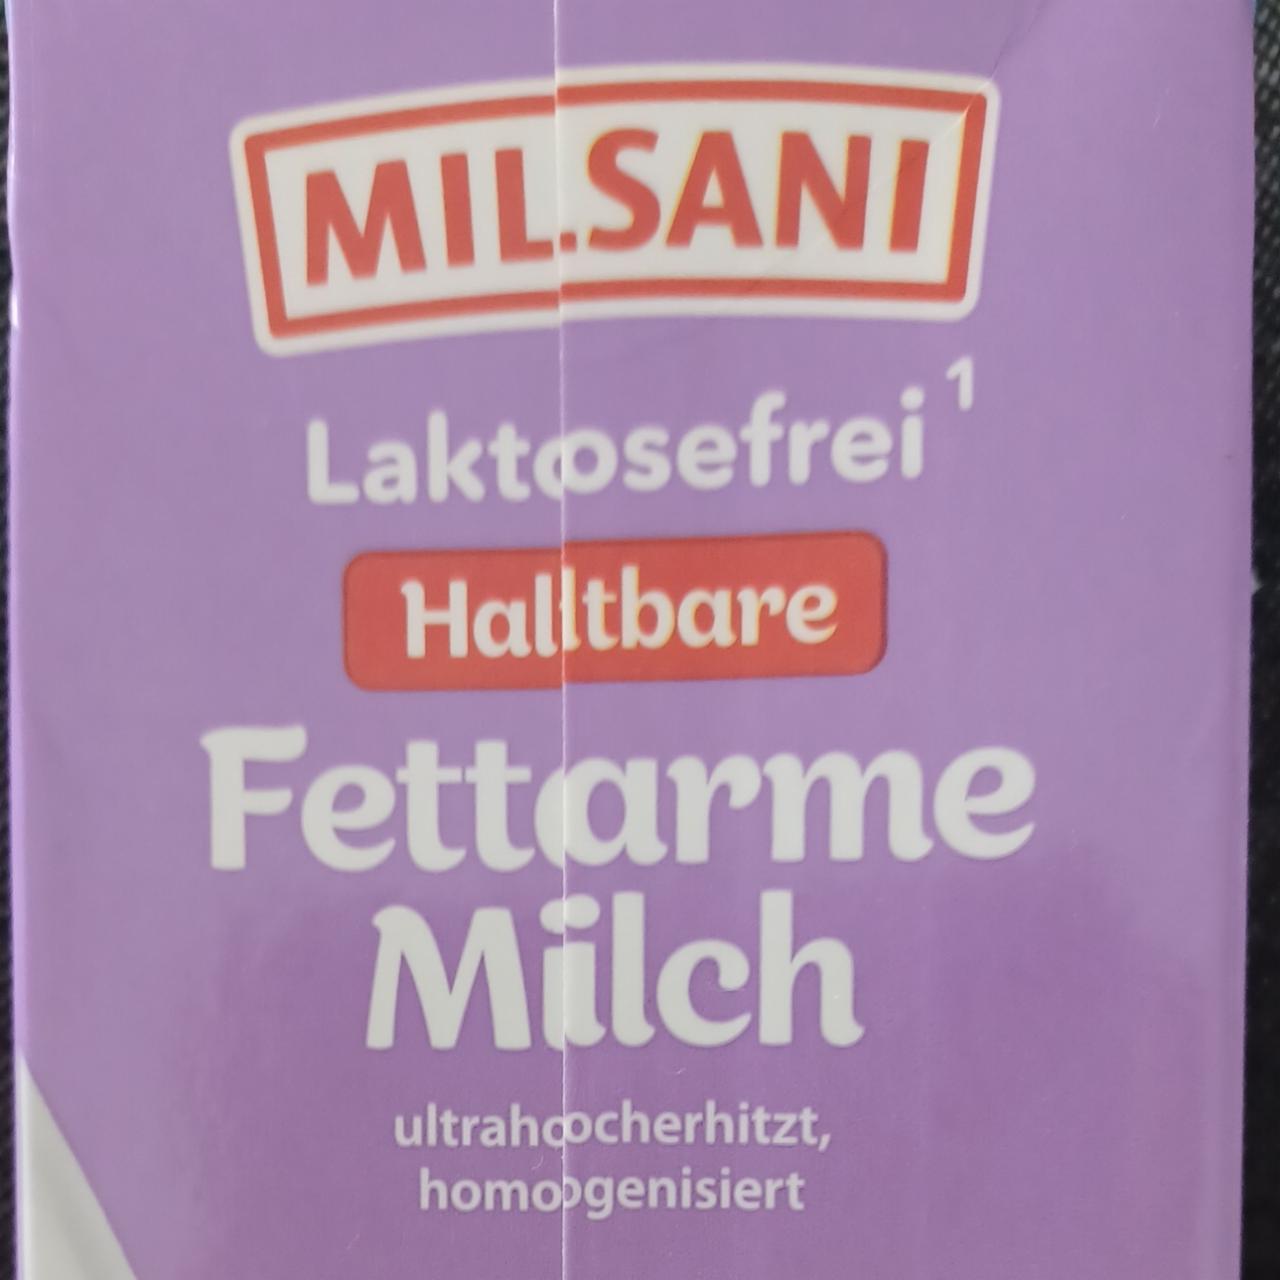 Фото - Молоко 1.5% безлактозное Laktosefrei Fettarme Milch Milsani